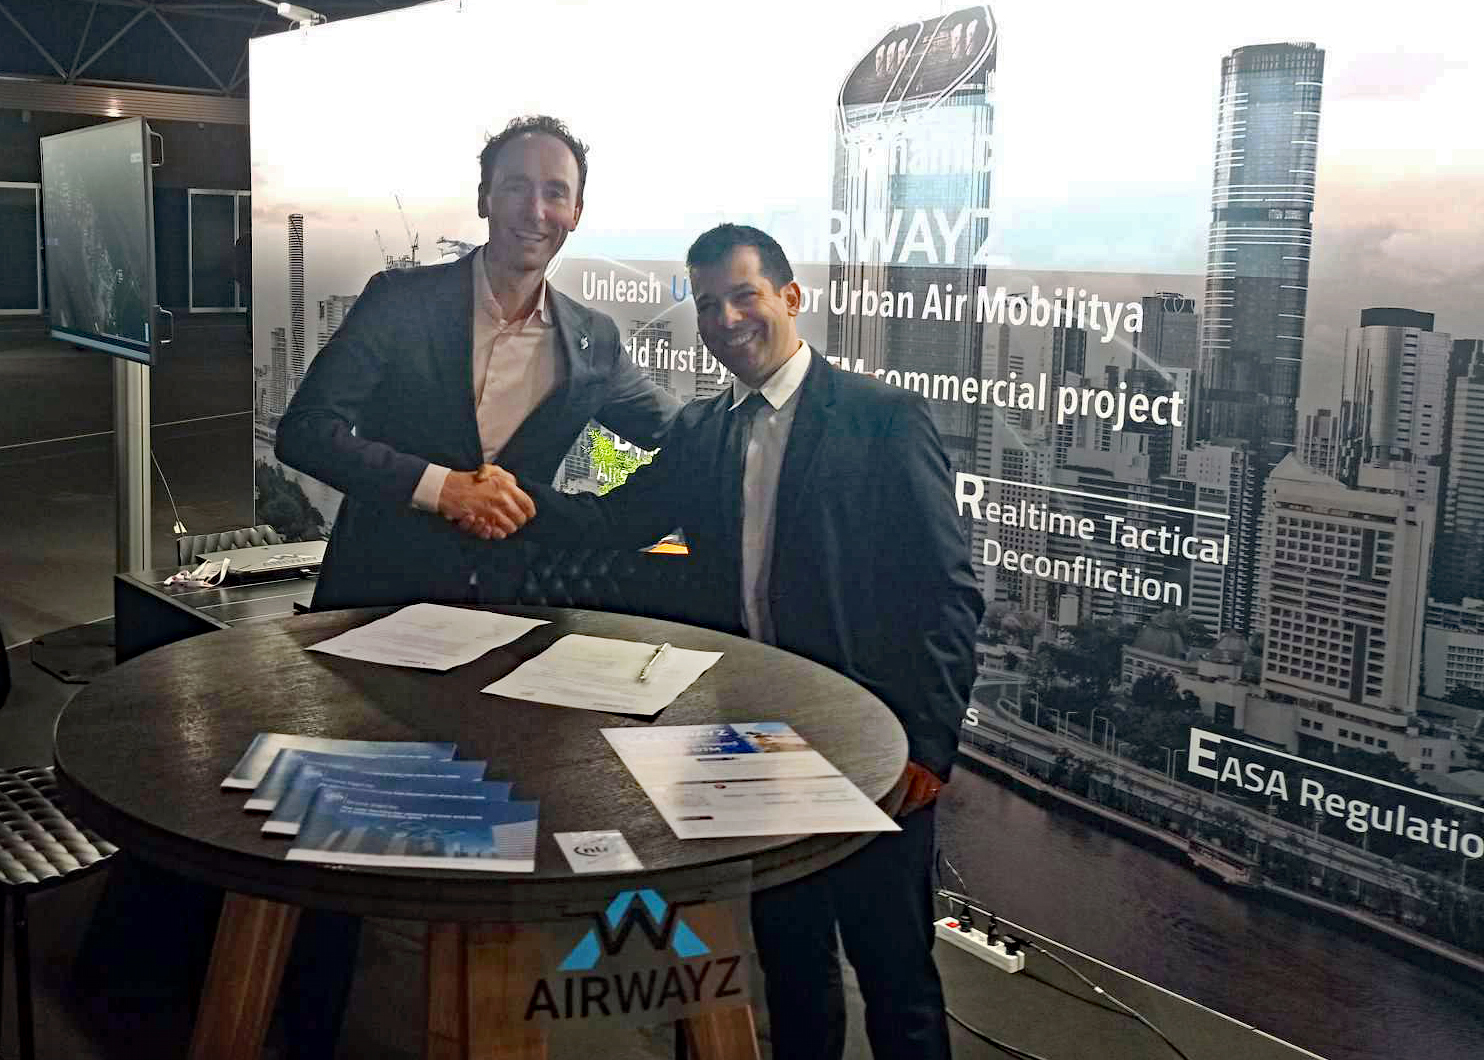 Airwayz, Royal NLR Partner to Accelerate Drone U-Space Adoption Across Europe